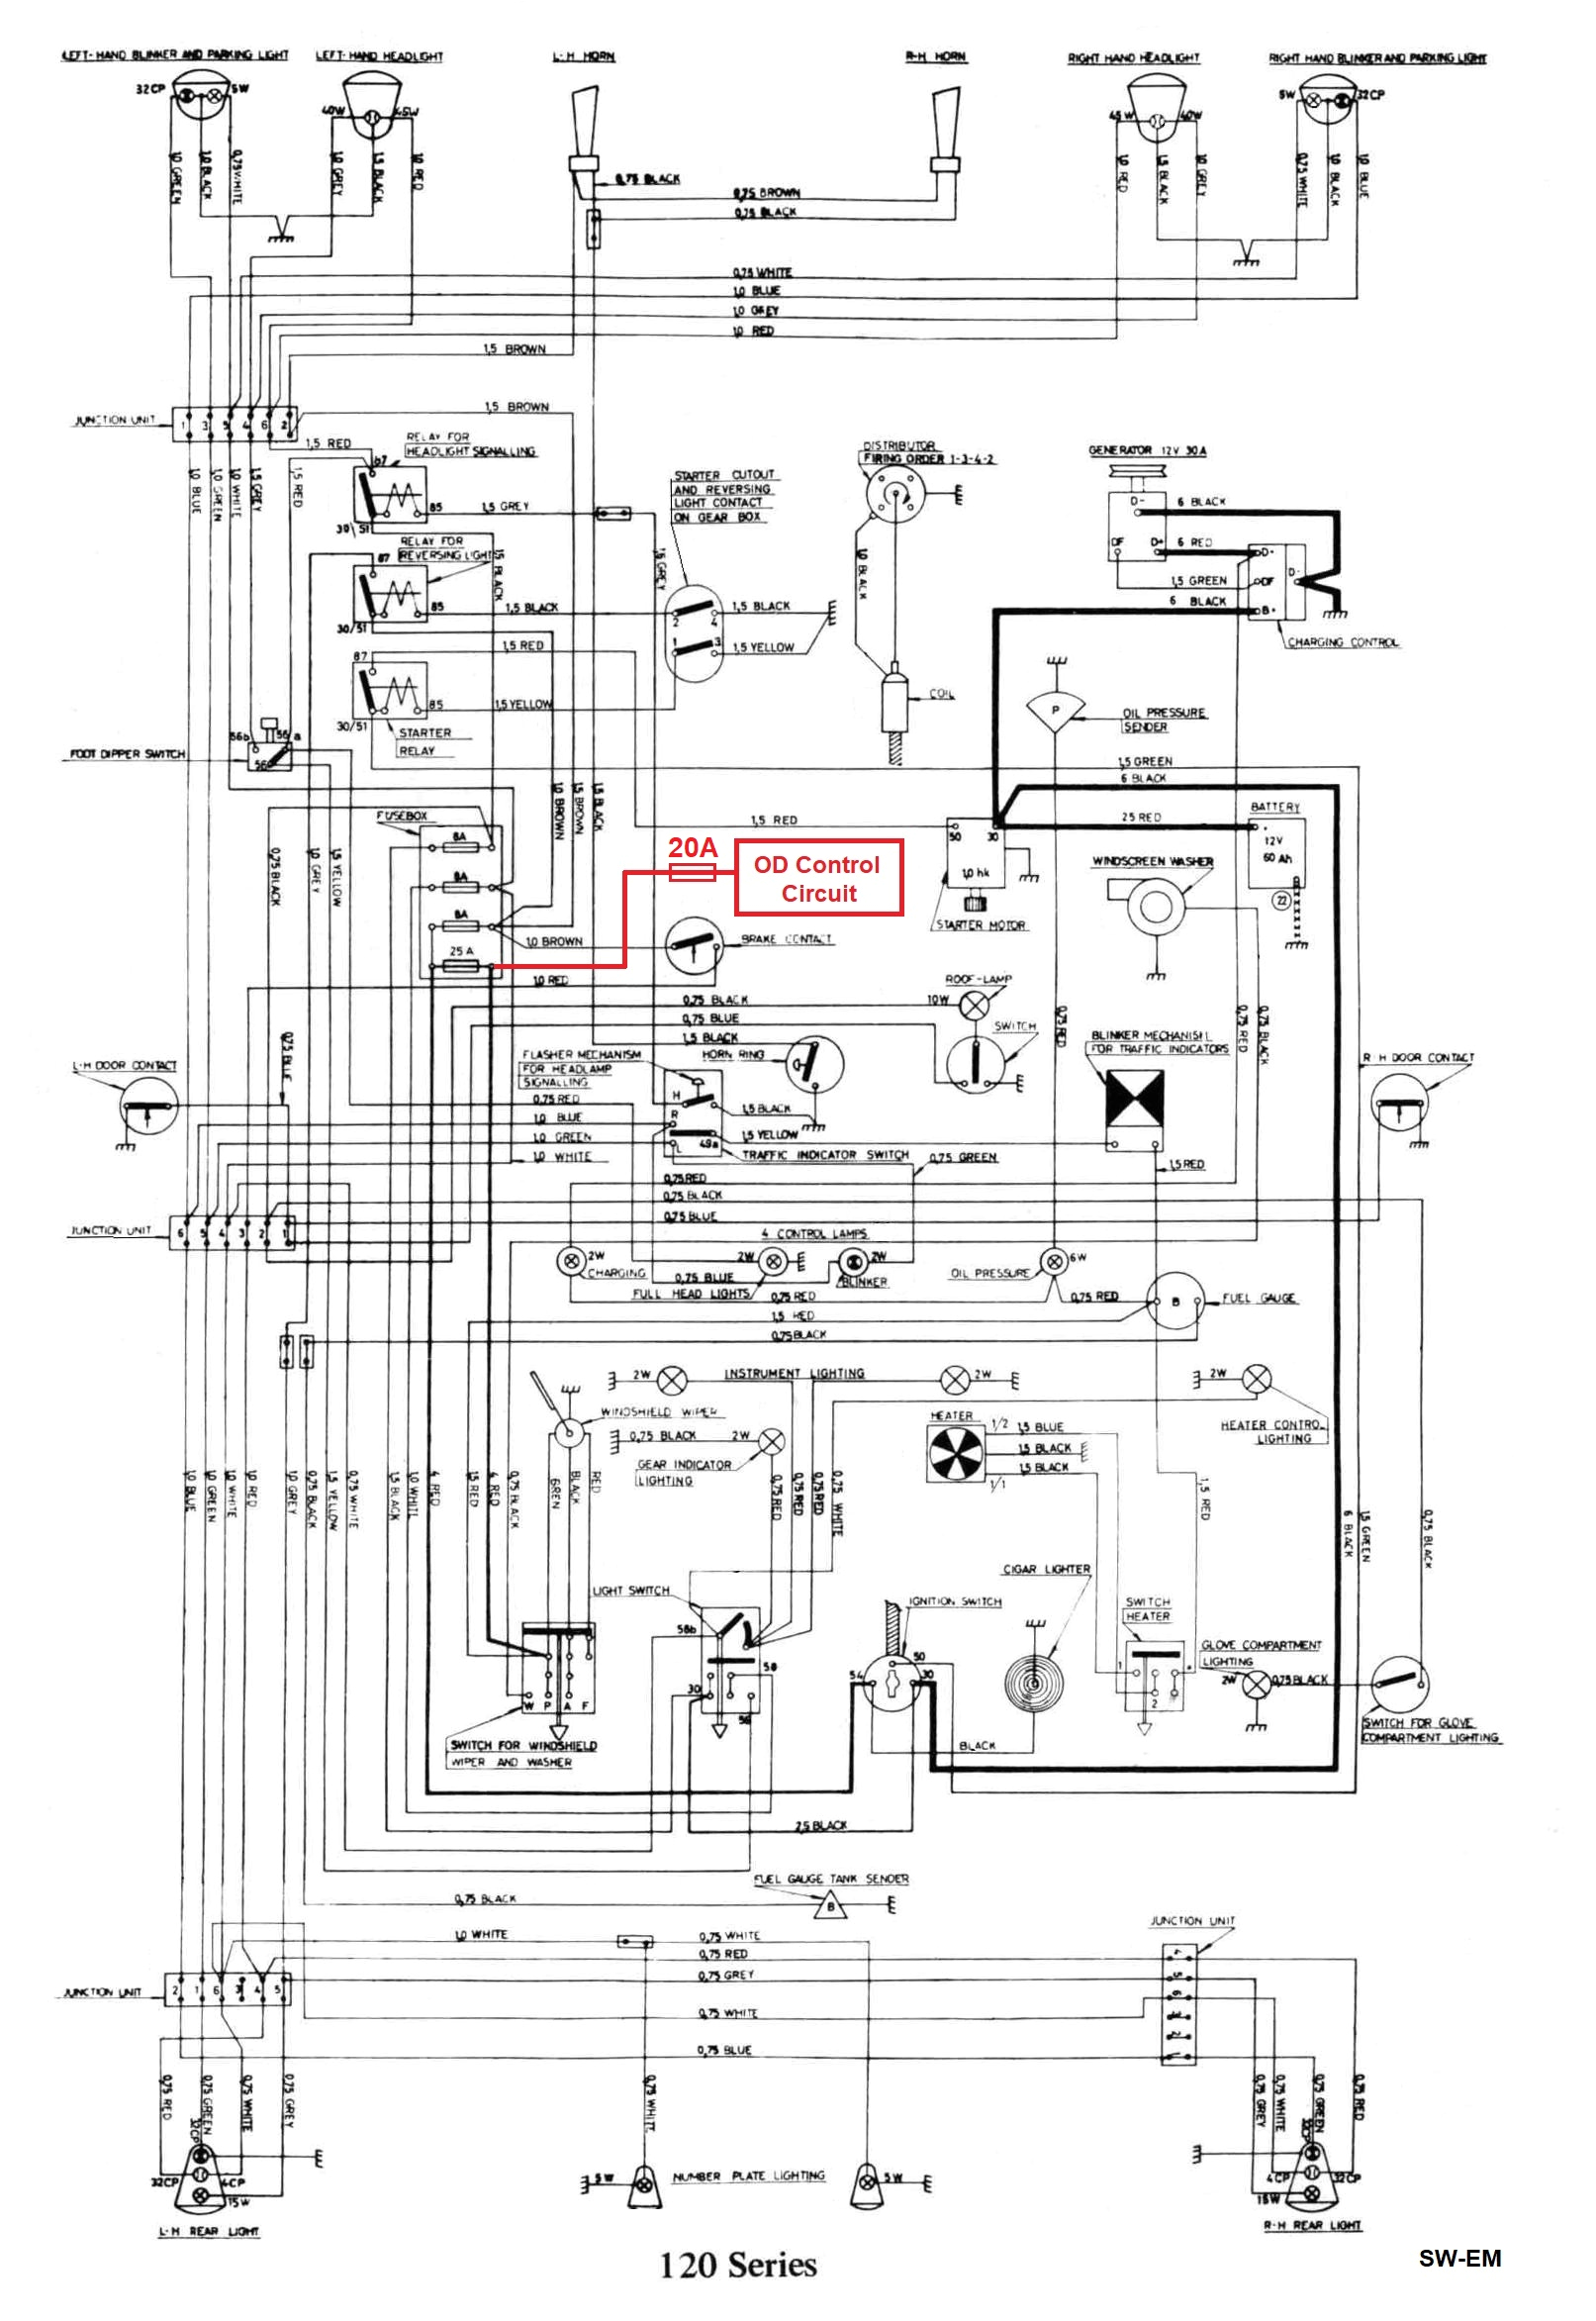 wiring diagram volvo amazon data schematic diagram 122s wiring diagram wiring diagram files wiring diagram volvo